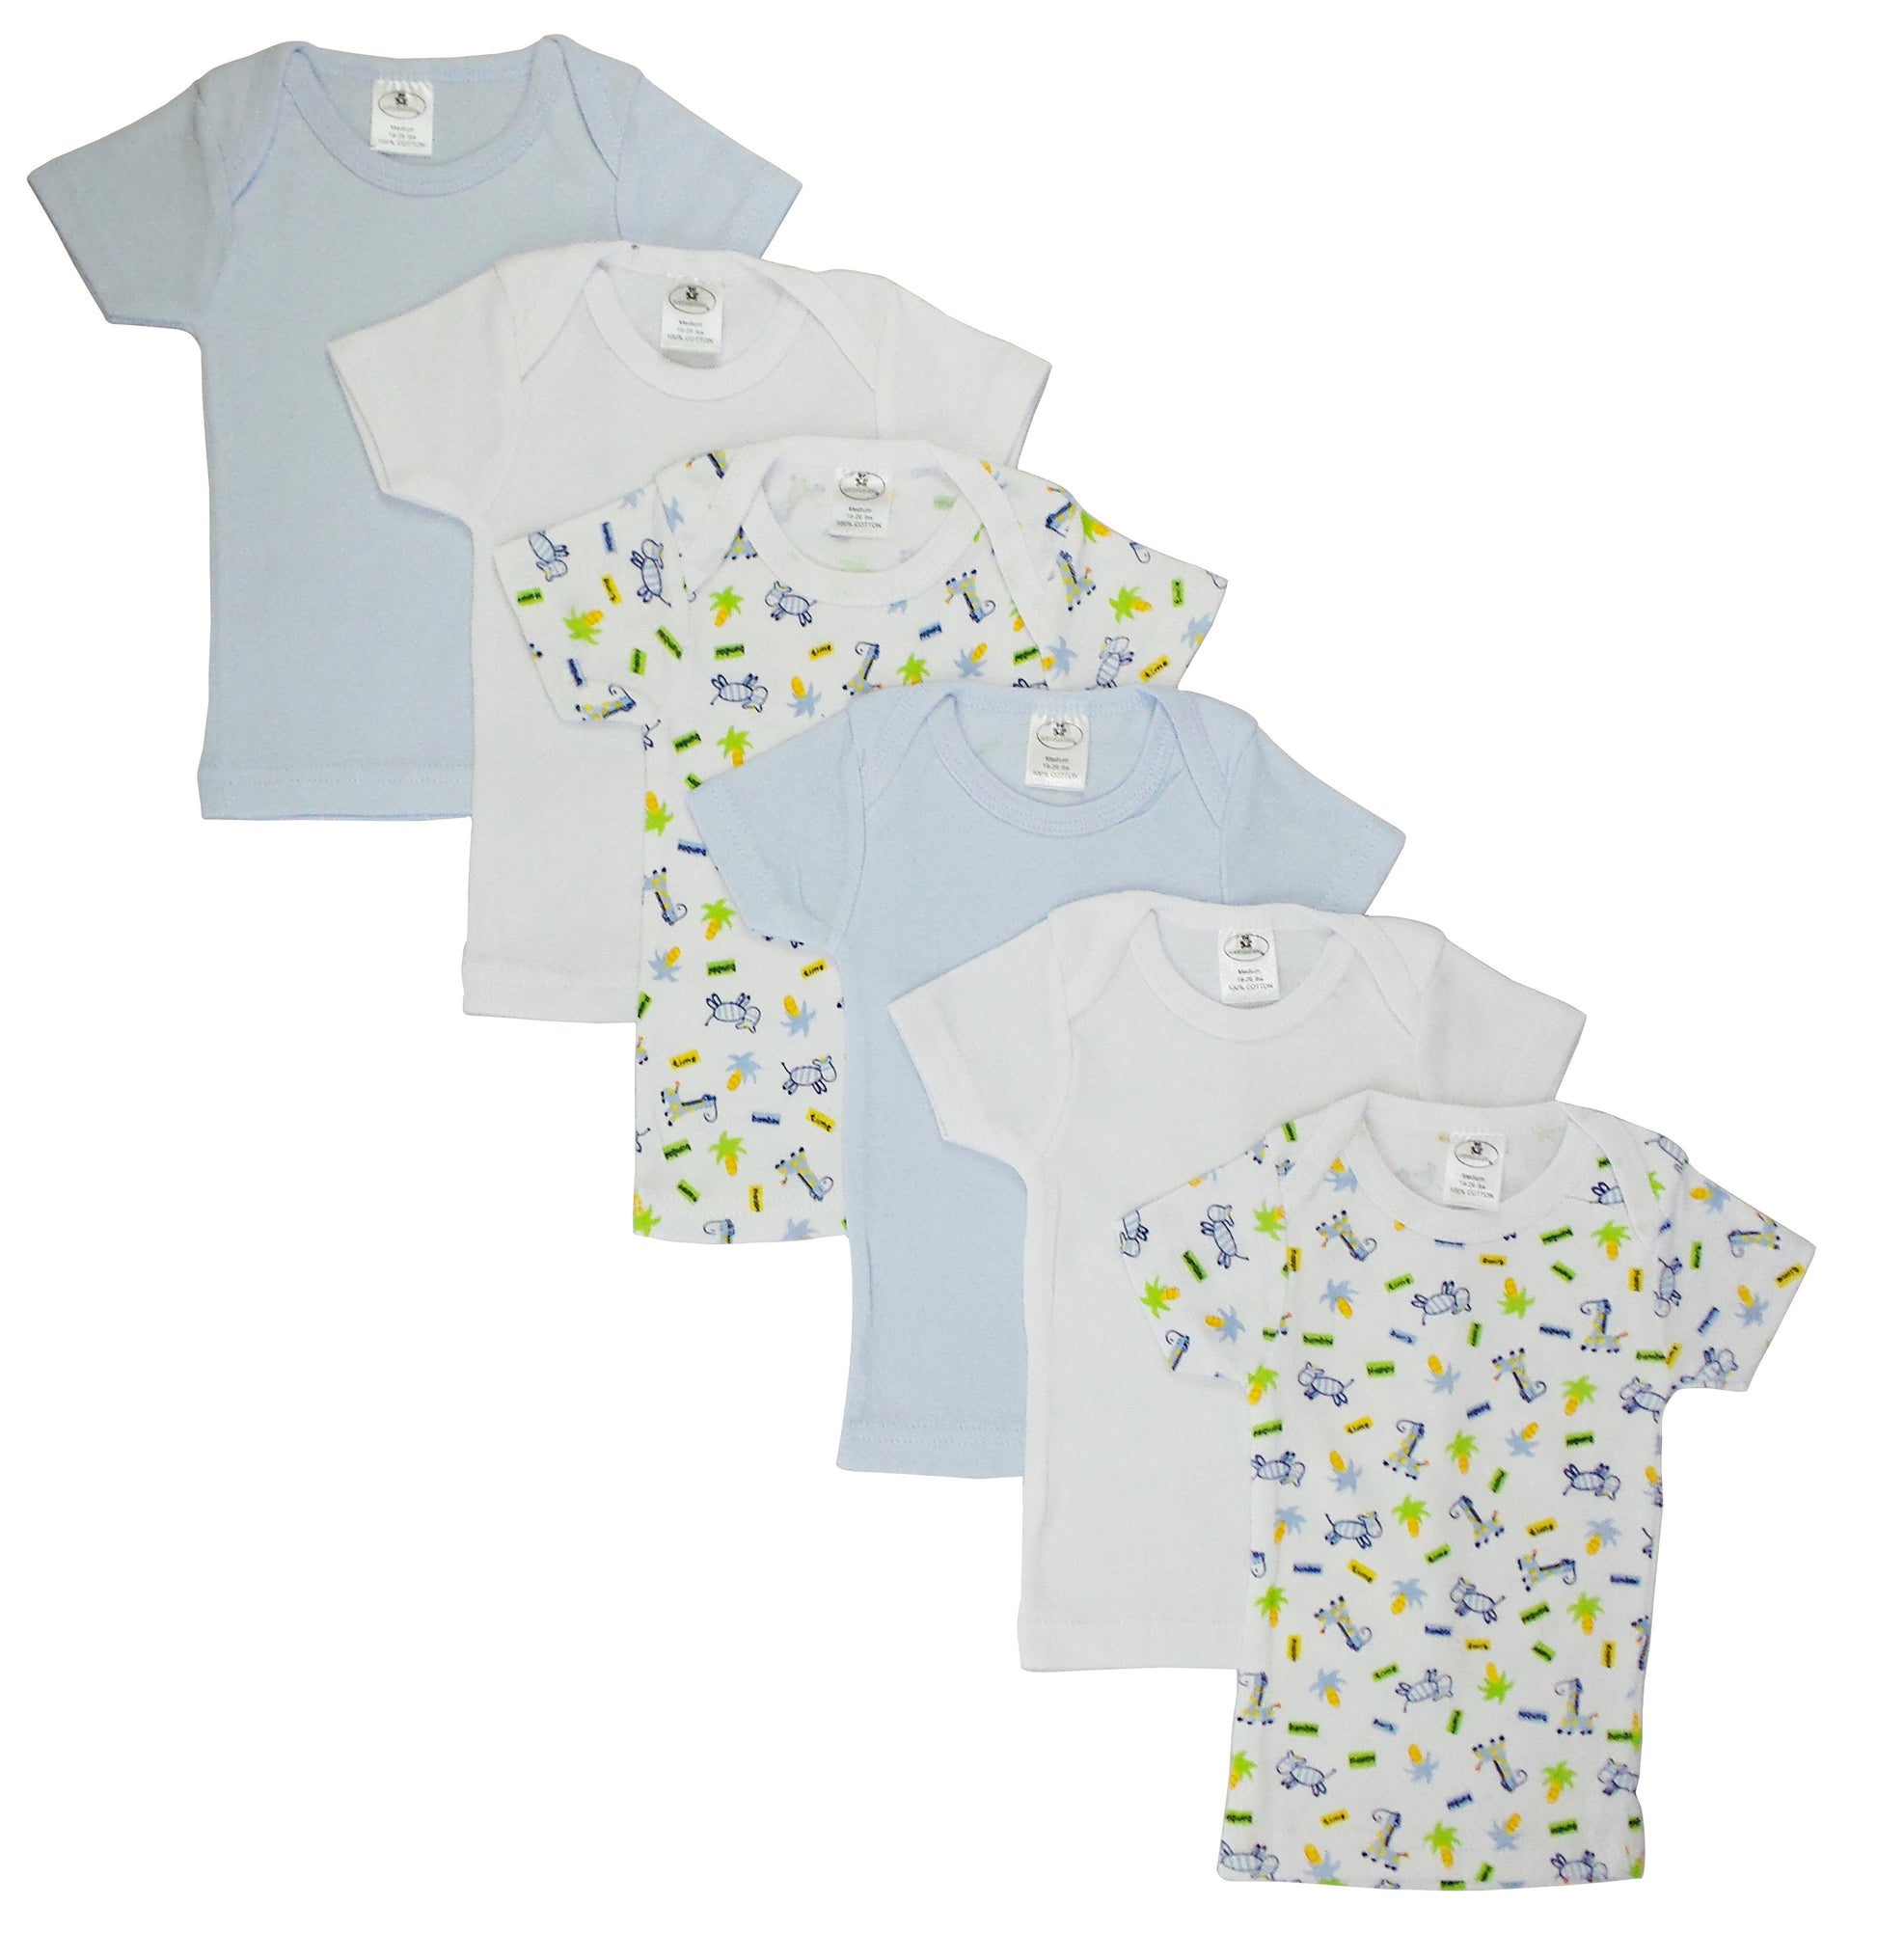 Girls Pastel Variety Short Sleeve Lap T-shirts 6 Pack 058_058